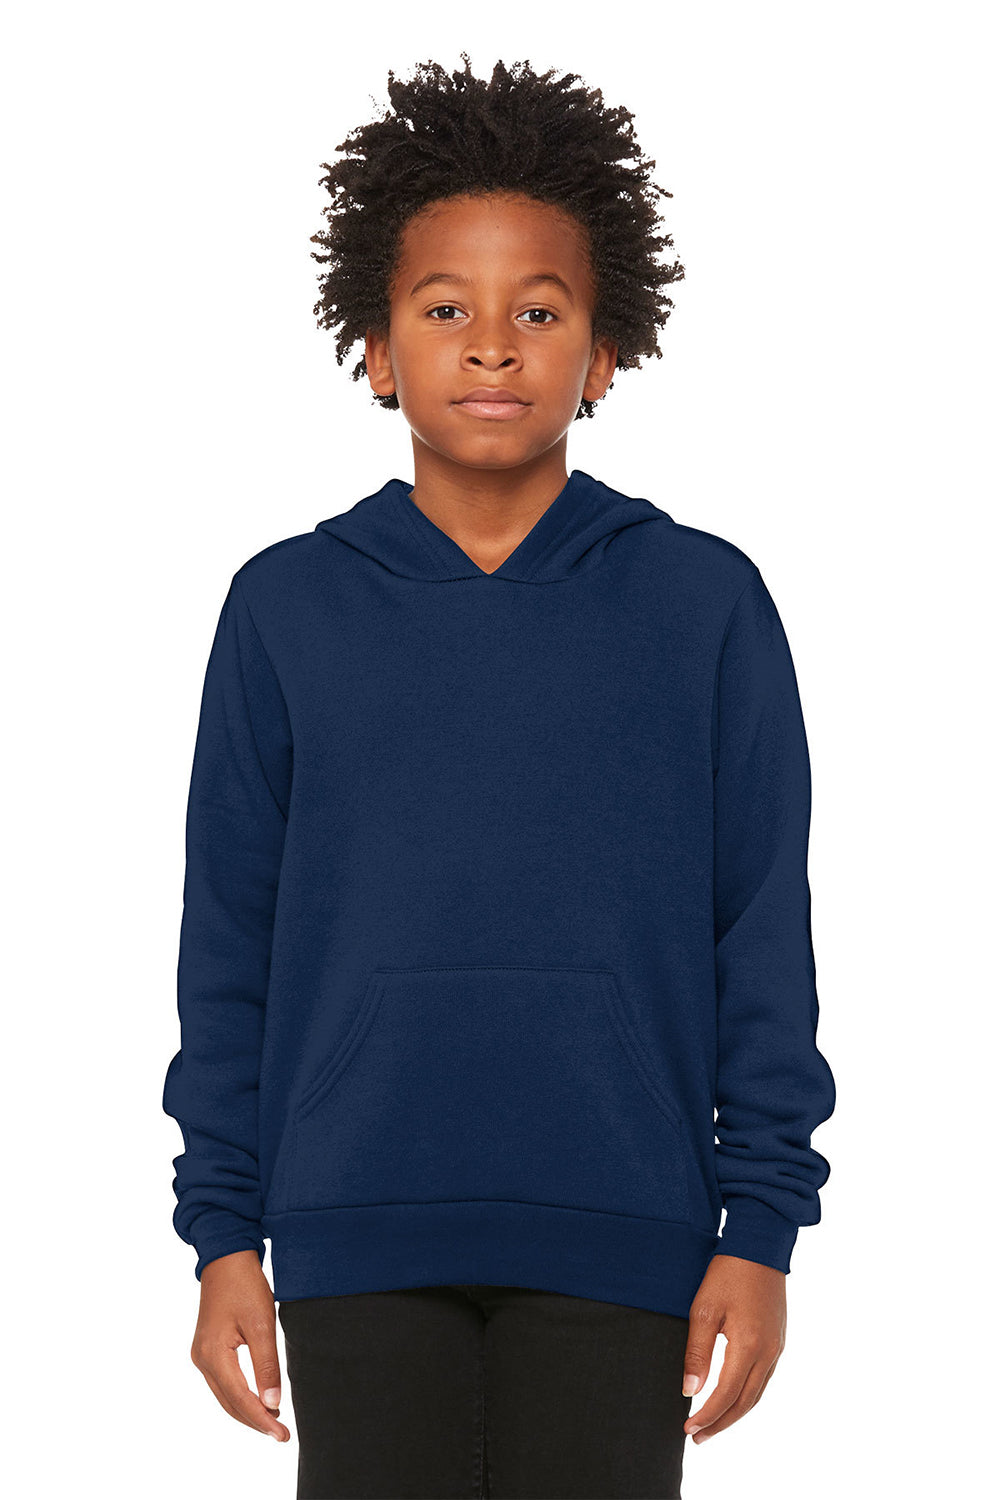 Bella + Canvas 3719Y/BC3719Y Youth Sponge Fleece Hooded Sweatshirt Hoodie Navy Blue Model Front